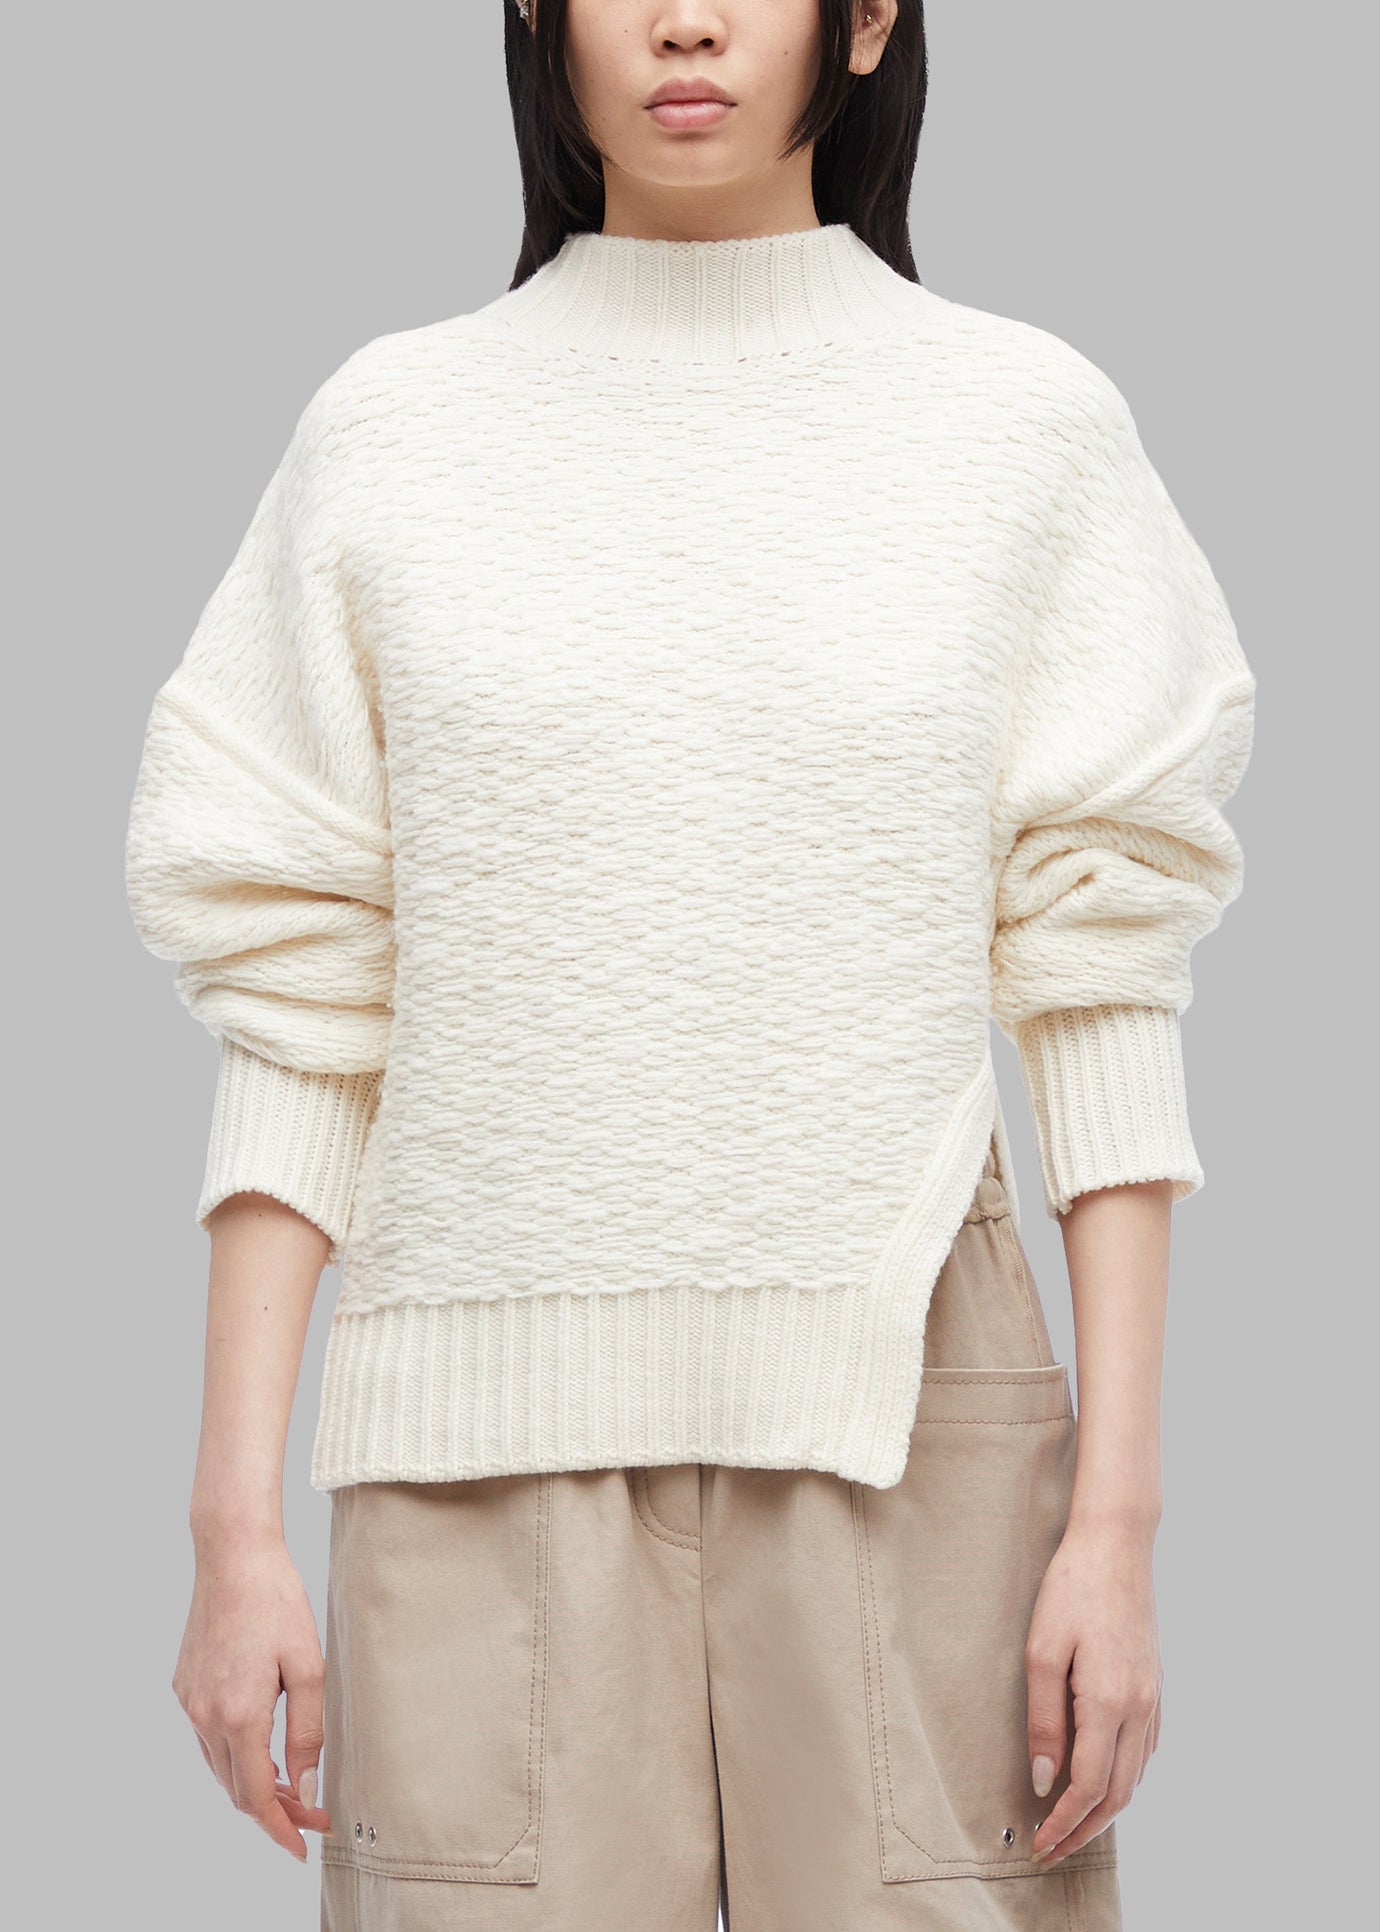 3.1 Phillip Lim Wool Jacquard Turtleneck Sweater - Ivory - 1